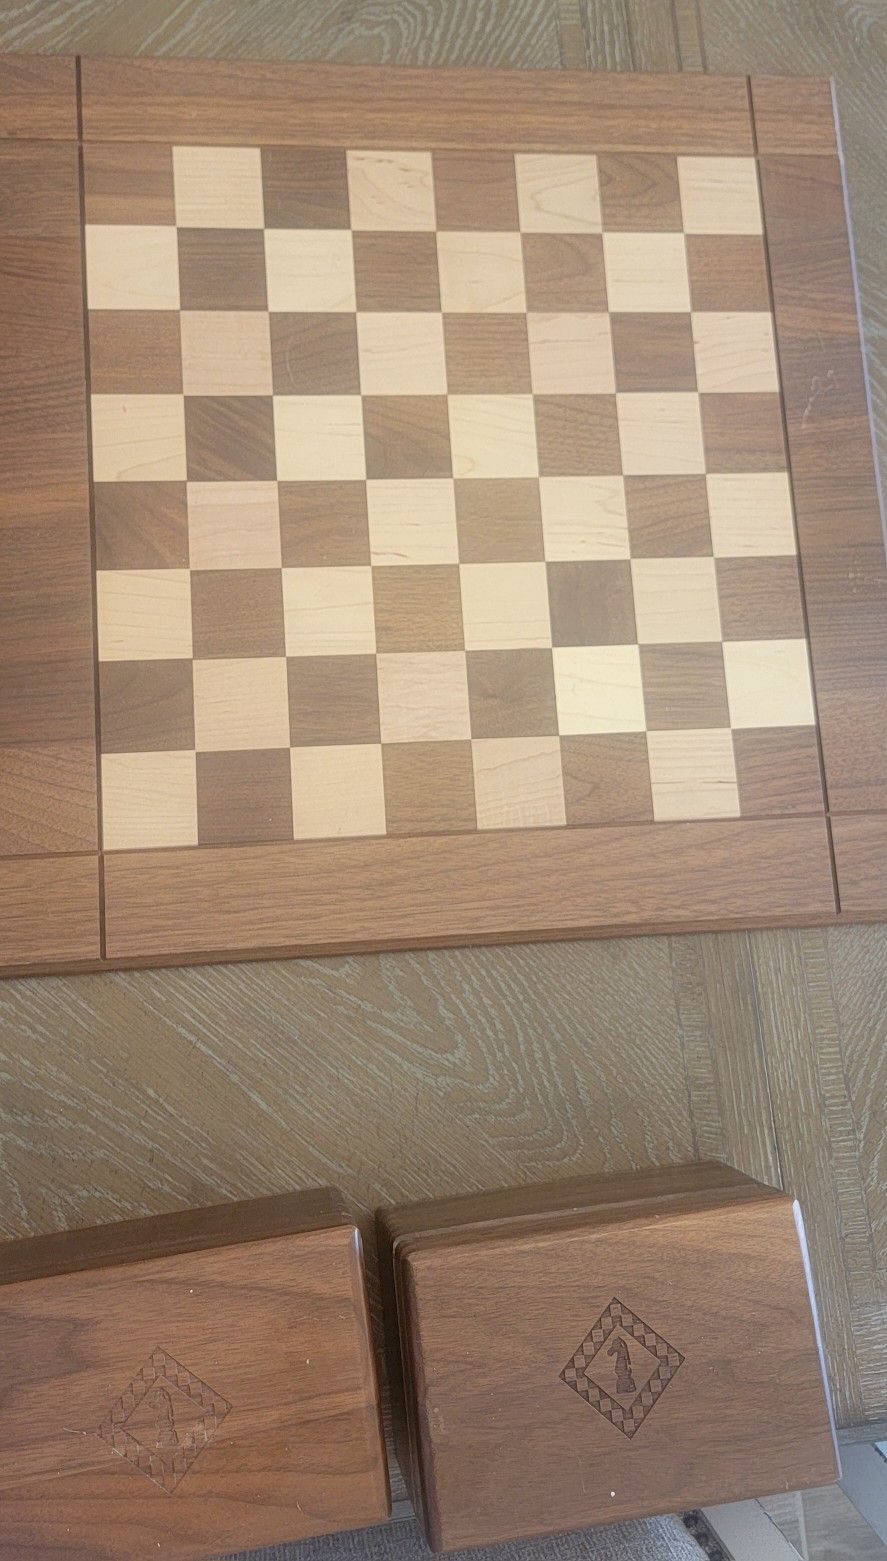 Wooden Chess Set.